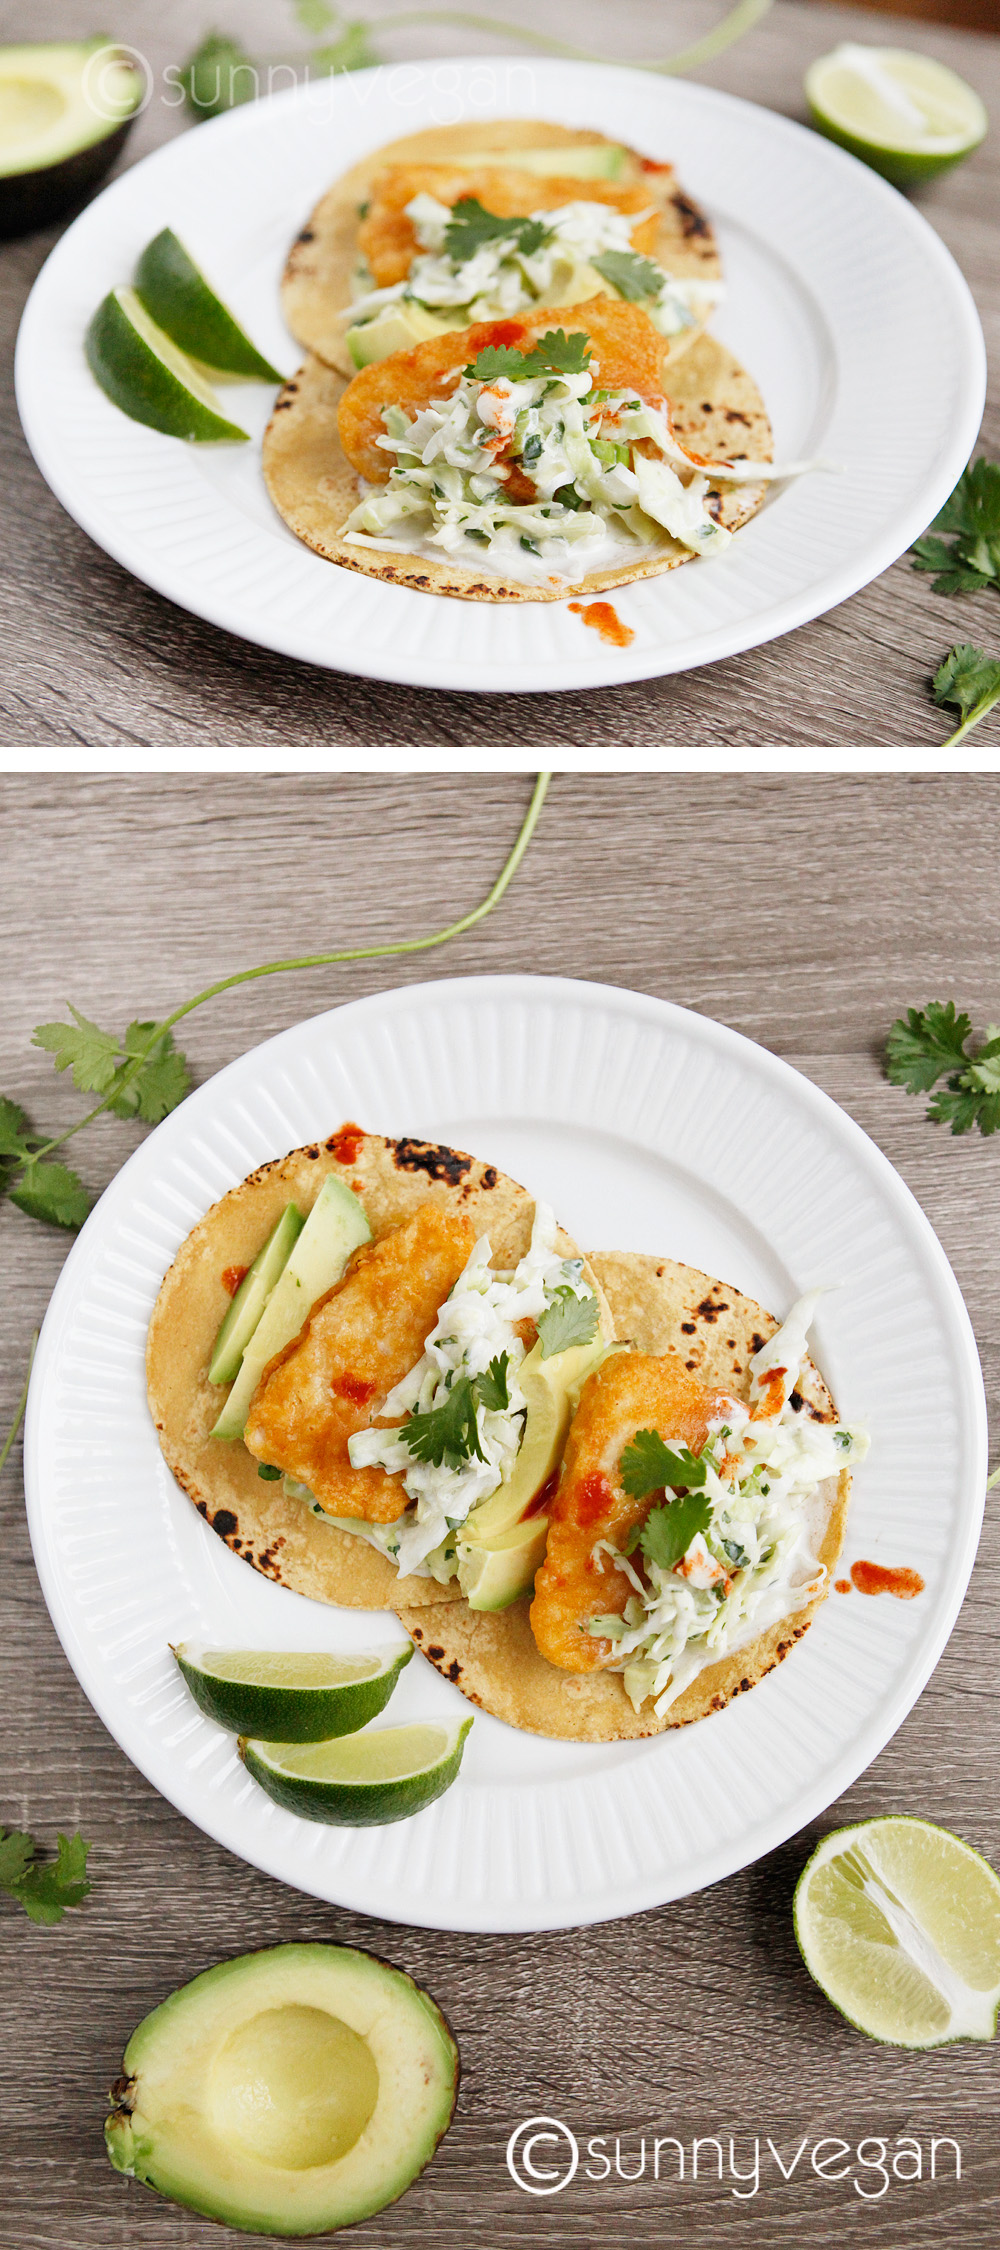 #OMGardein #meetchef fishless taco cilantro slaw recipe from sunny vegan